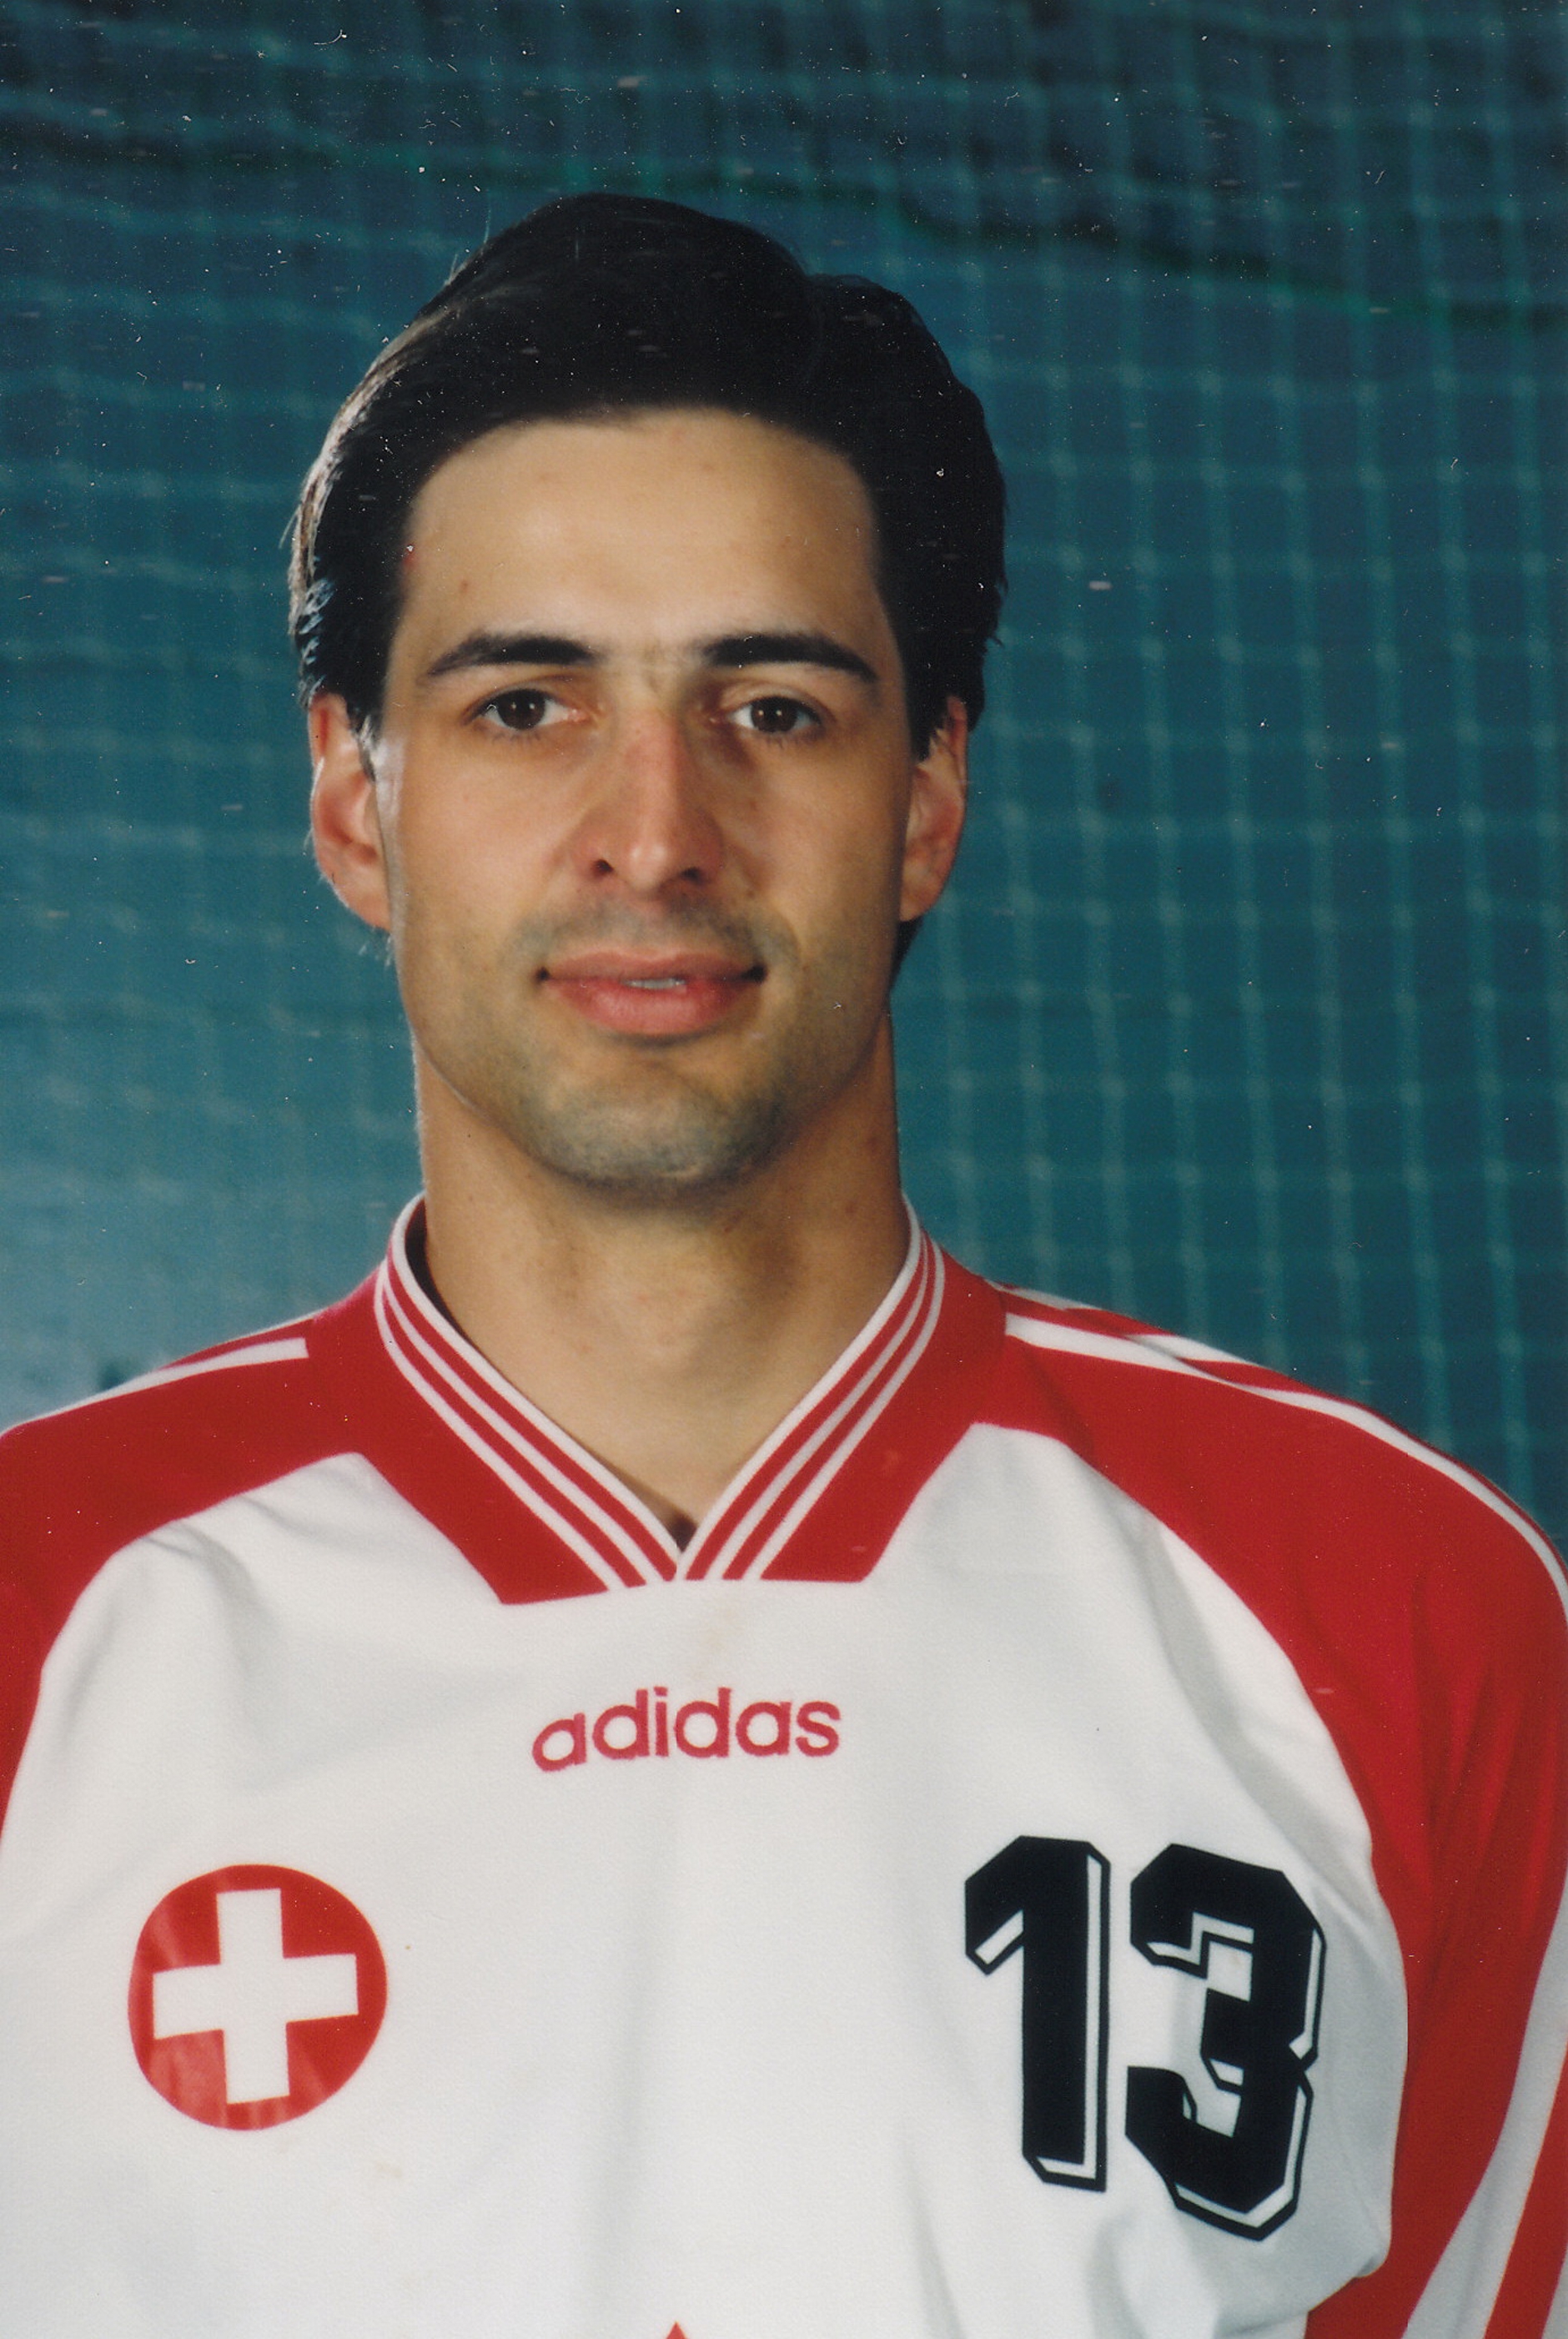 1997-05-25 Marc Baumgartner Saalsporthalle.jpg